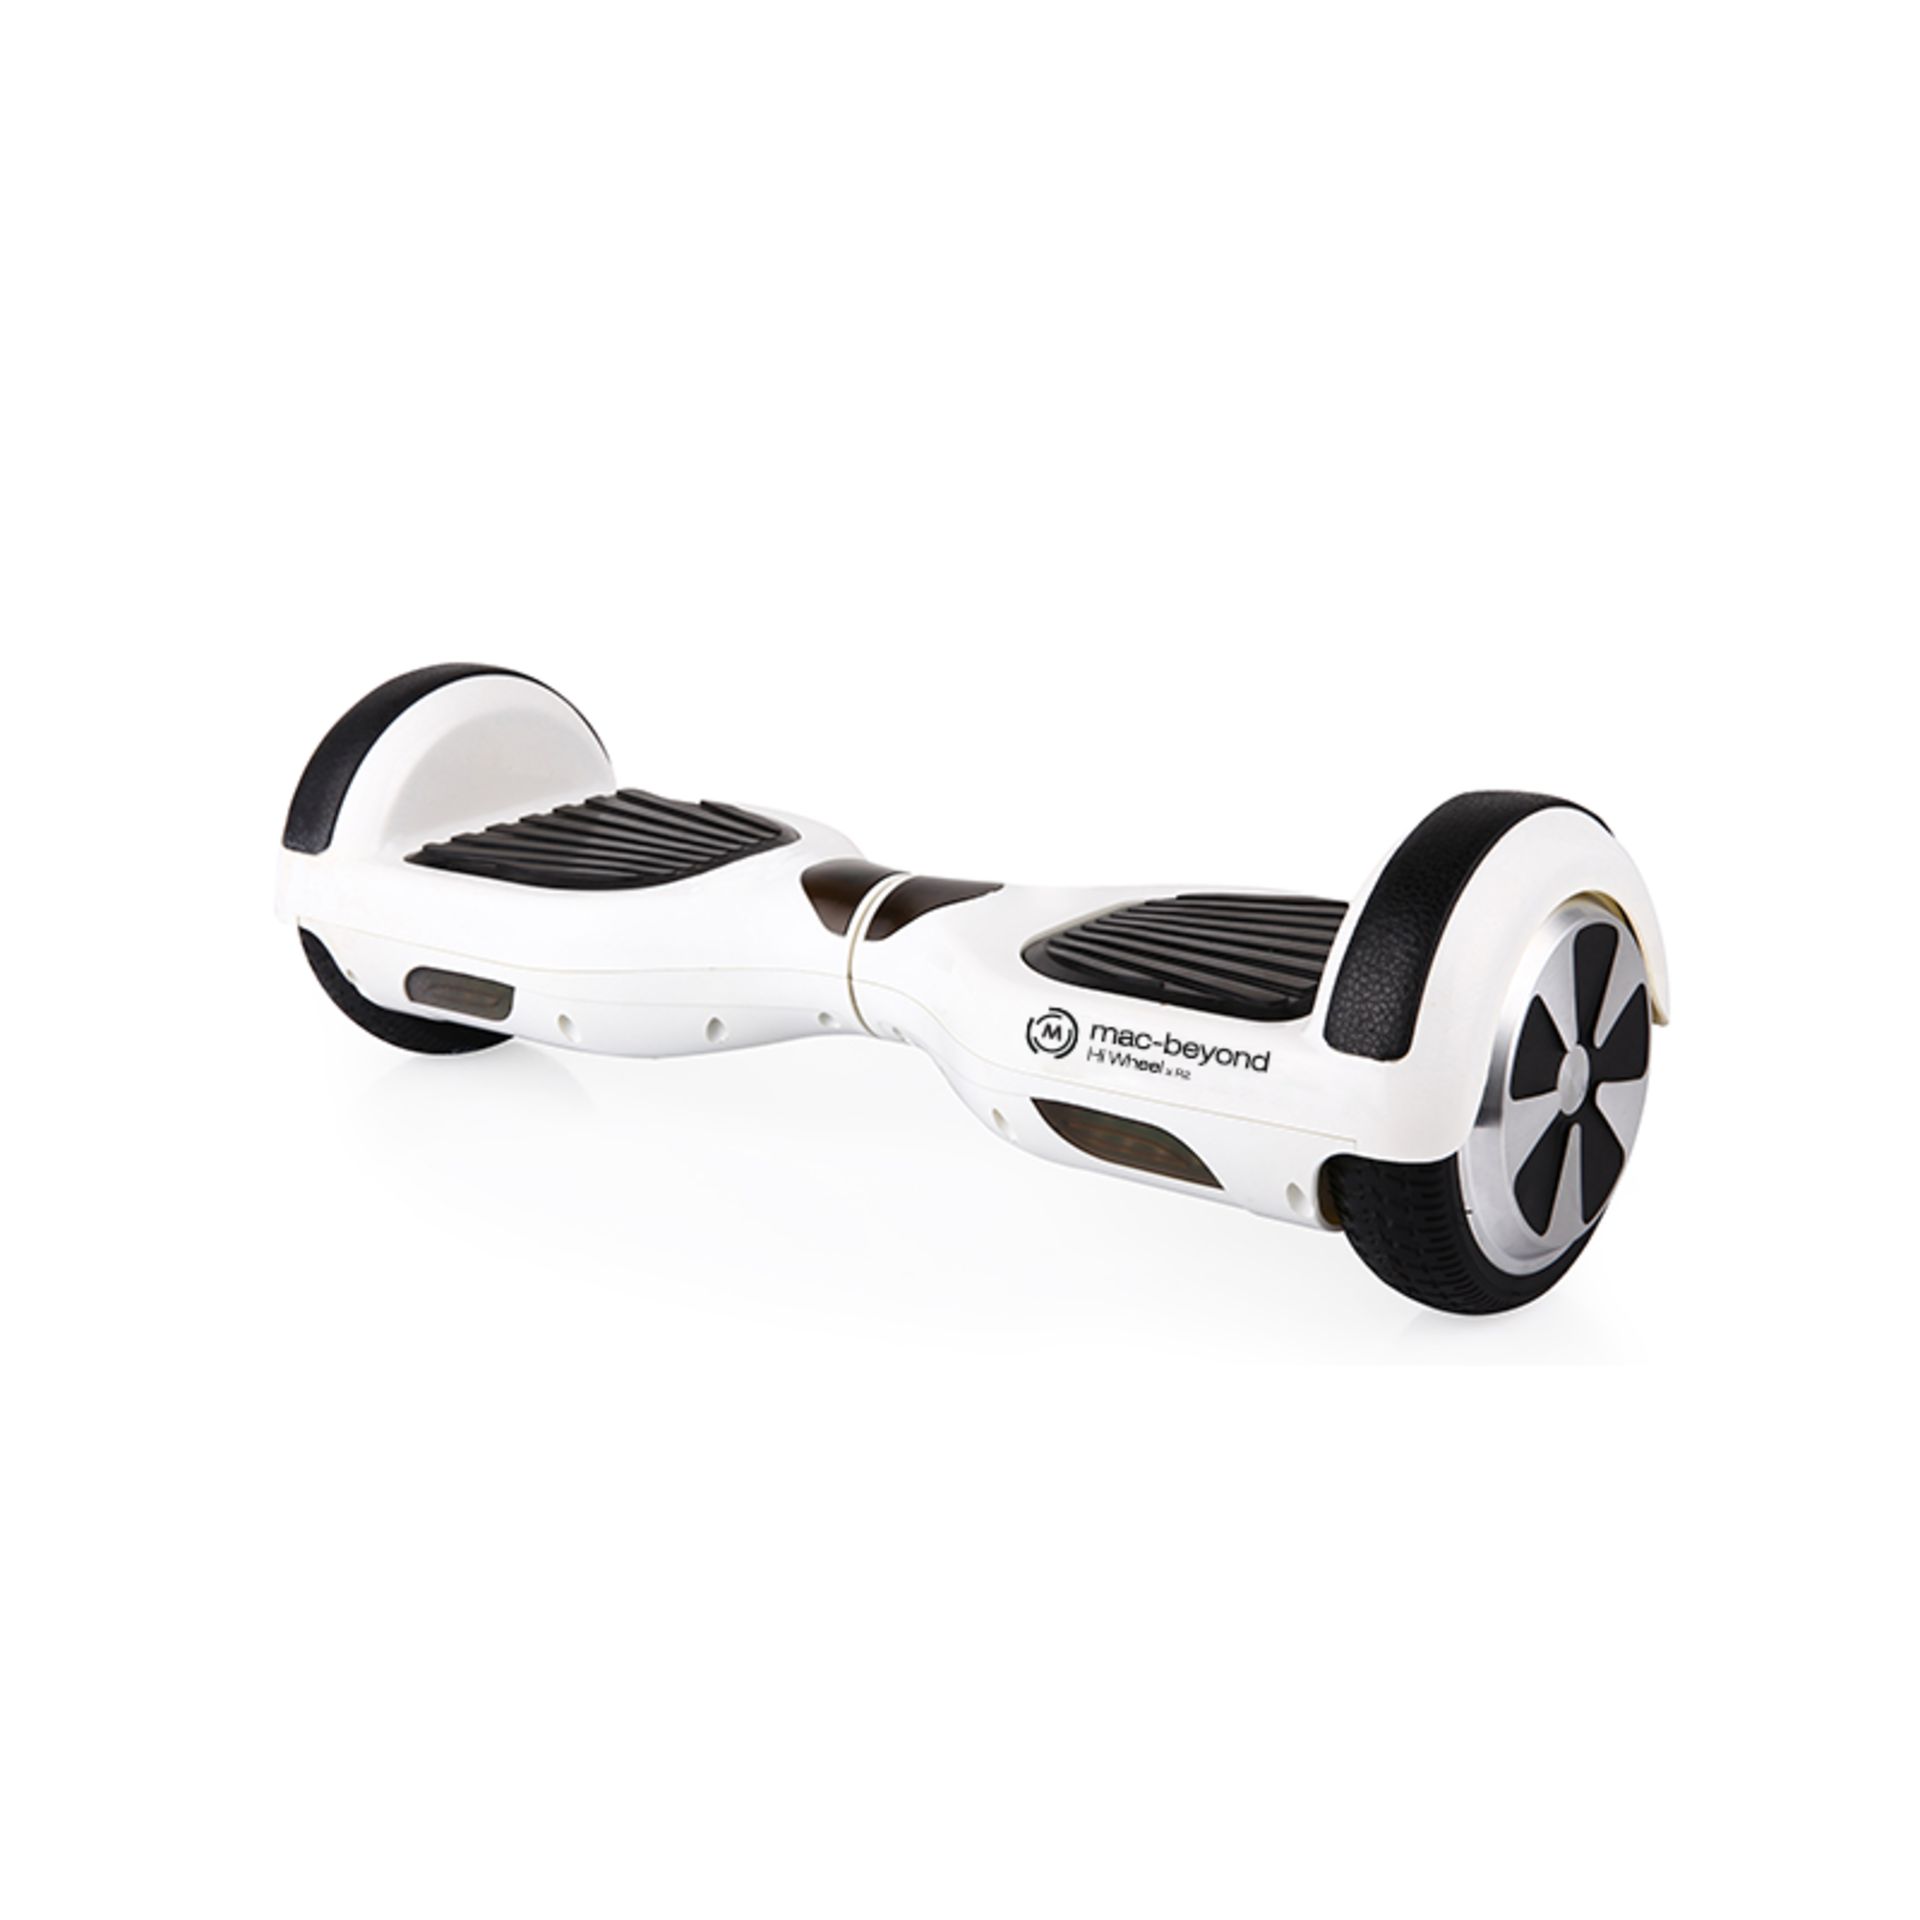 macbeyond x Hi wheel Series, White Model Name: R2 LED (6.5 inch wheels, Best Seller) Smart